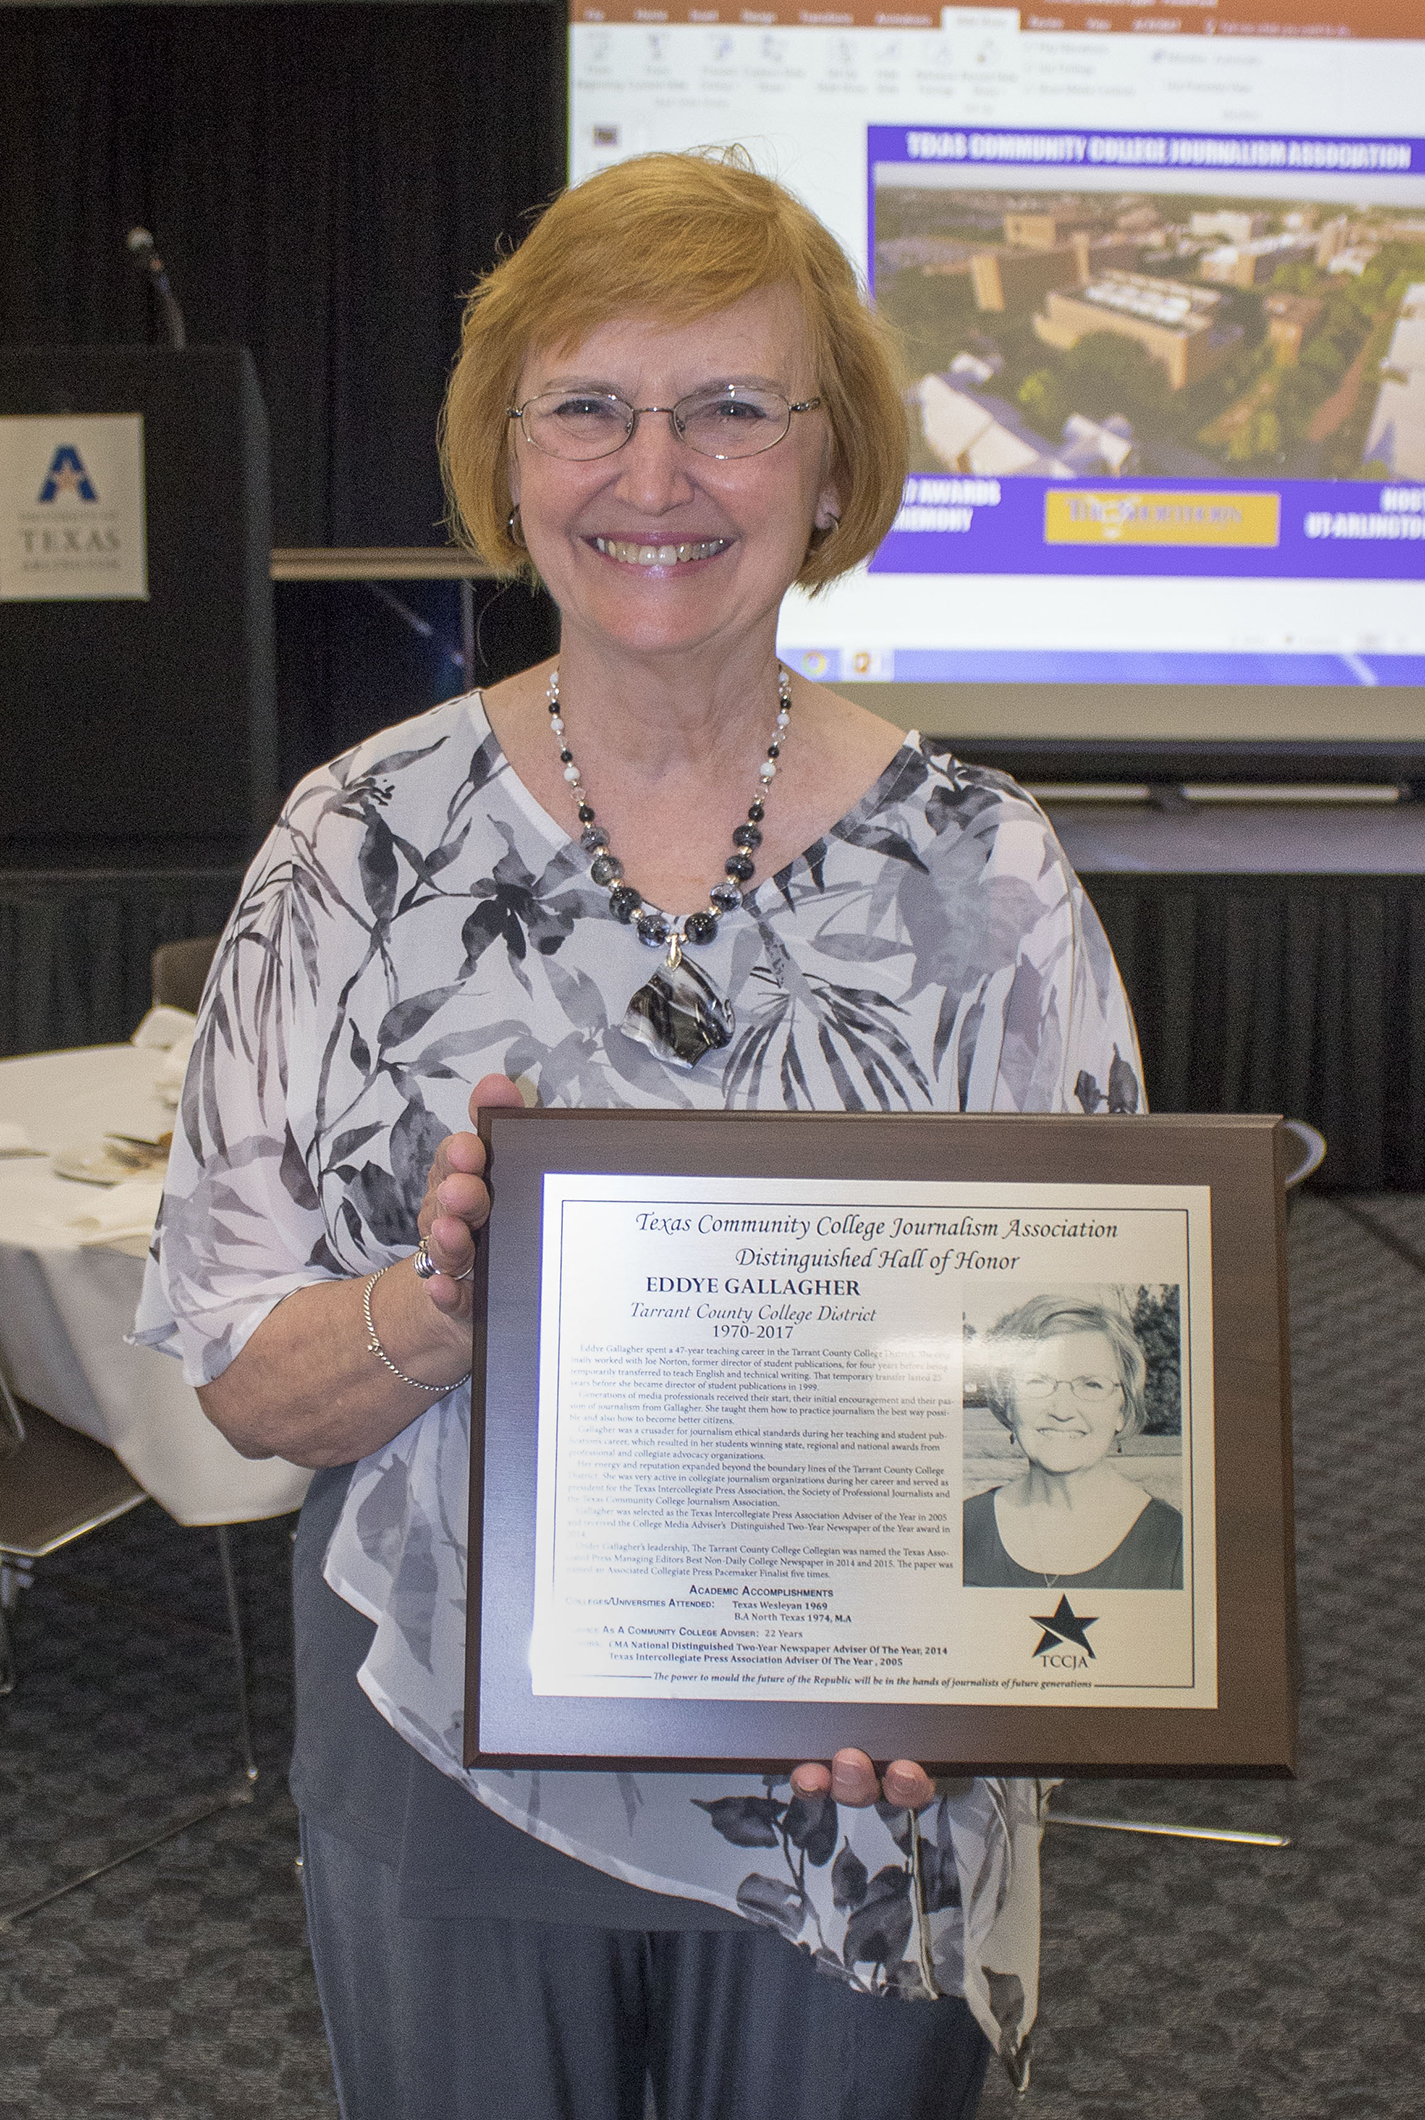 Former student publications director Eddye Gallagher holds her TCCJA award Oct. 6.